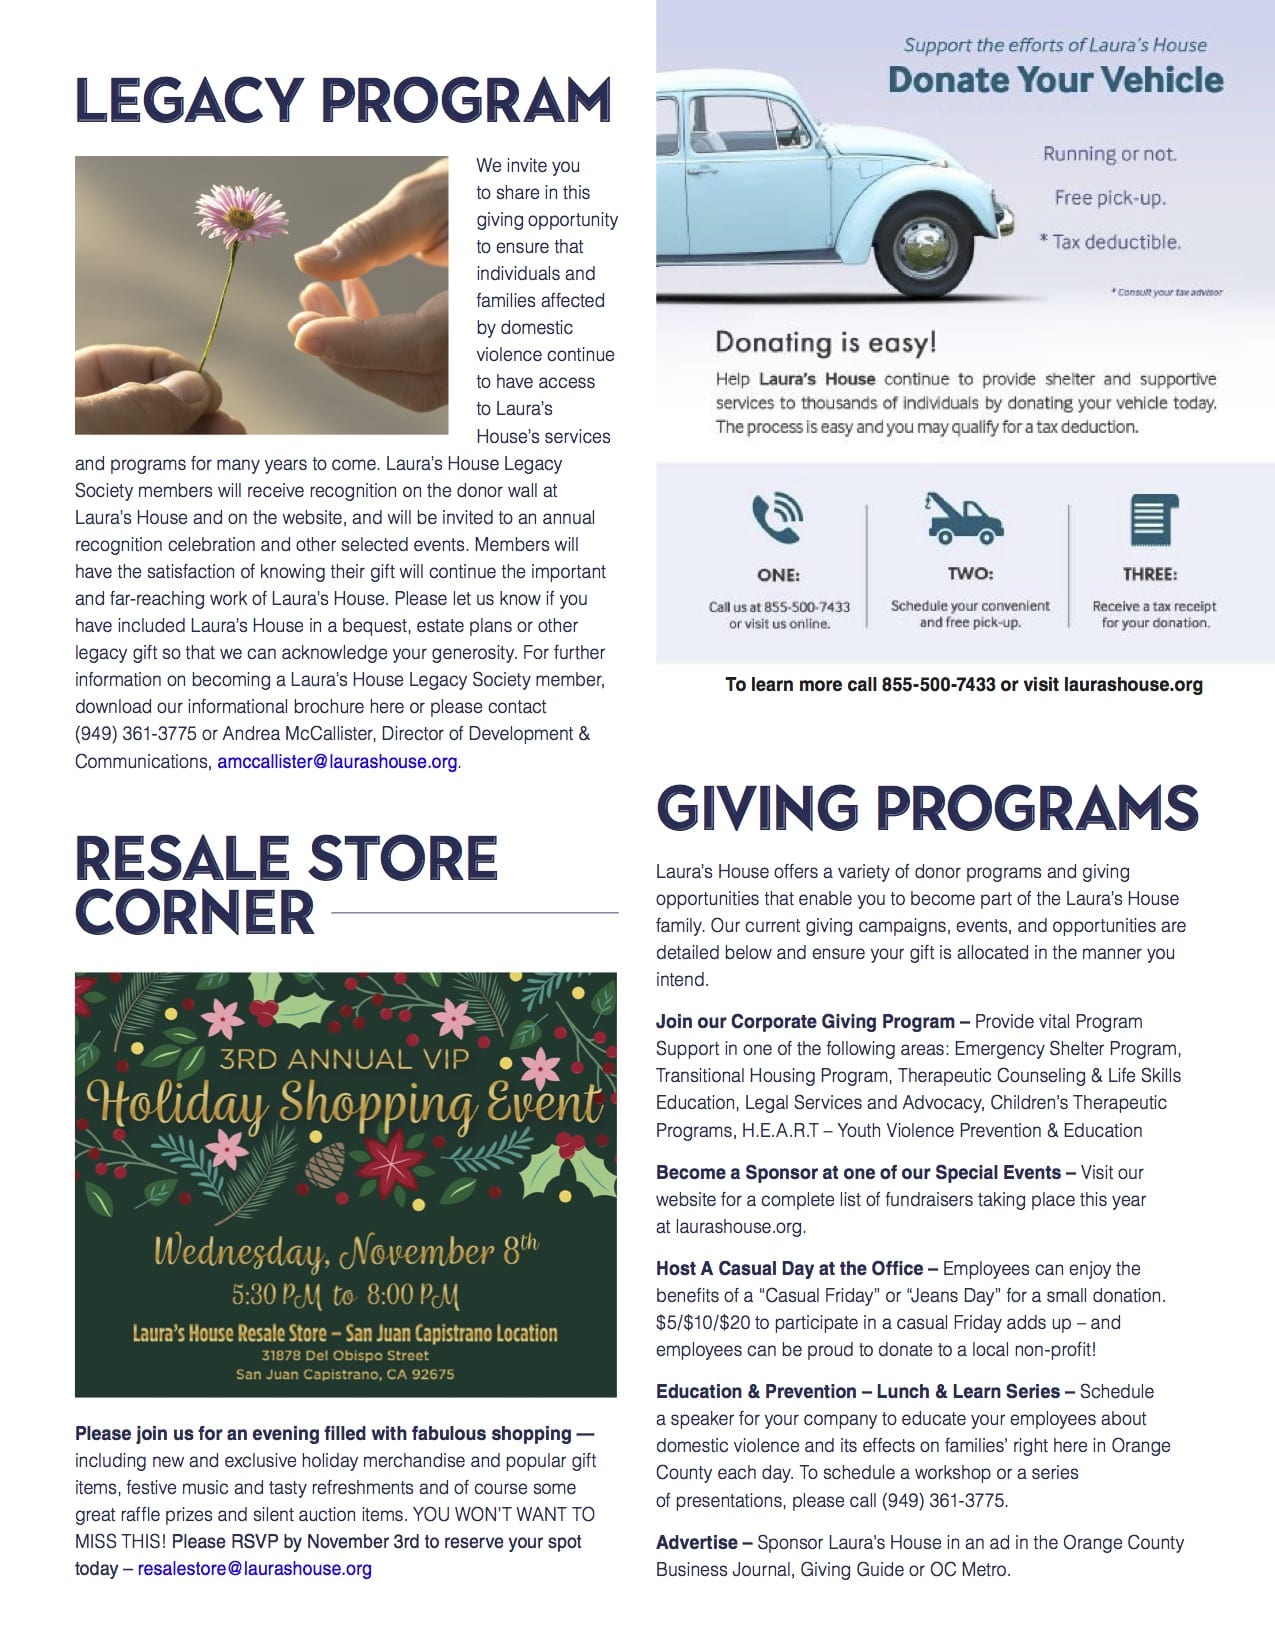 Legacy Program, Resale Store, Giving Programs